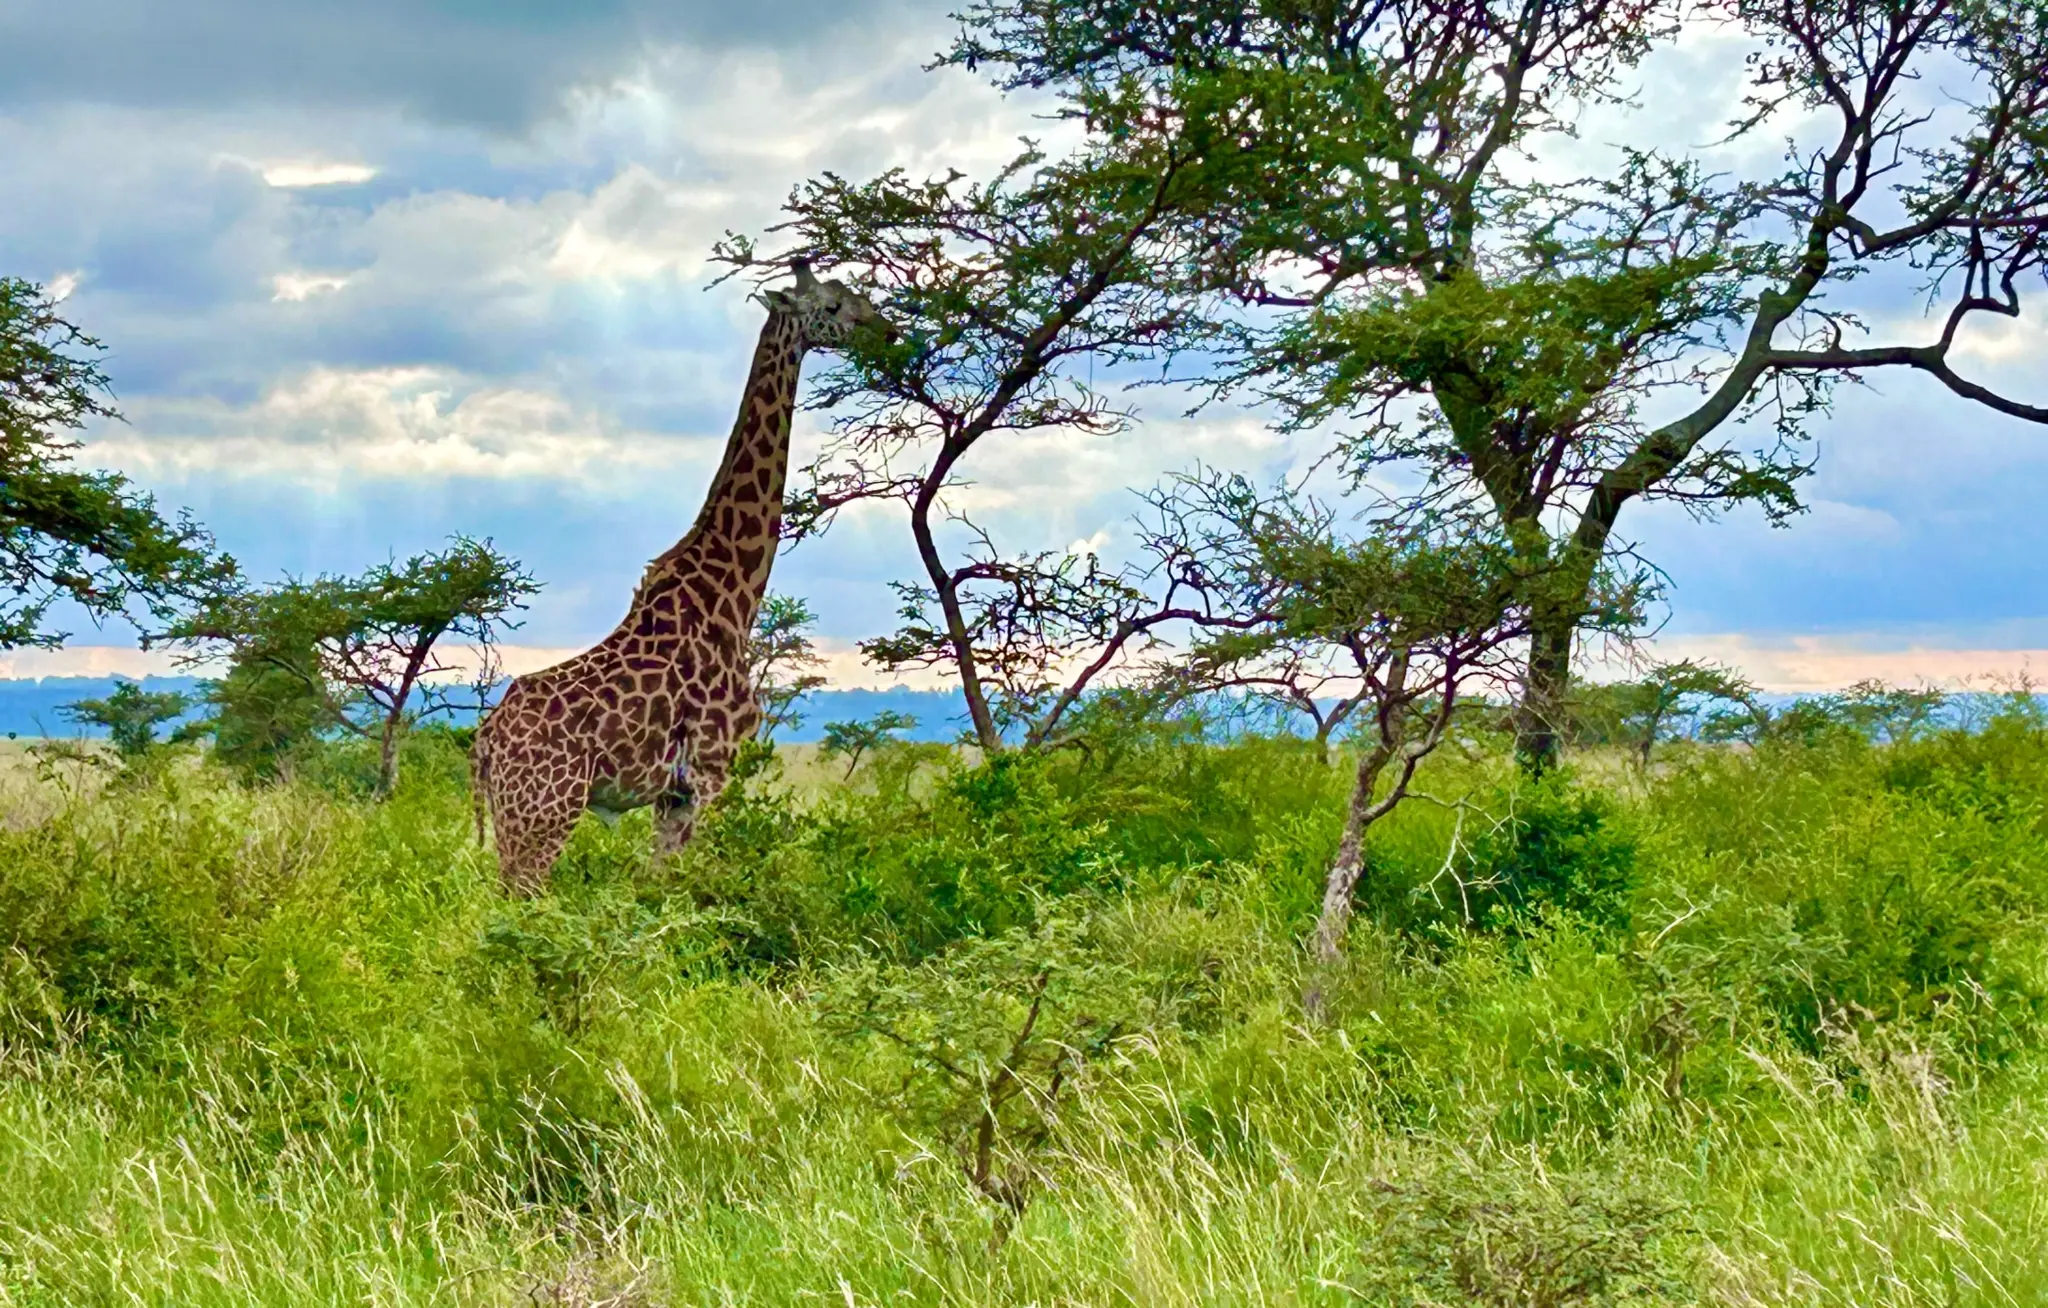 giraffe grazing and feeding in grass meadow and trees outside nairobi, kenya.